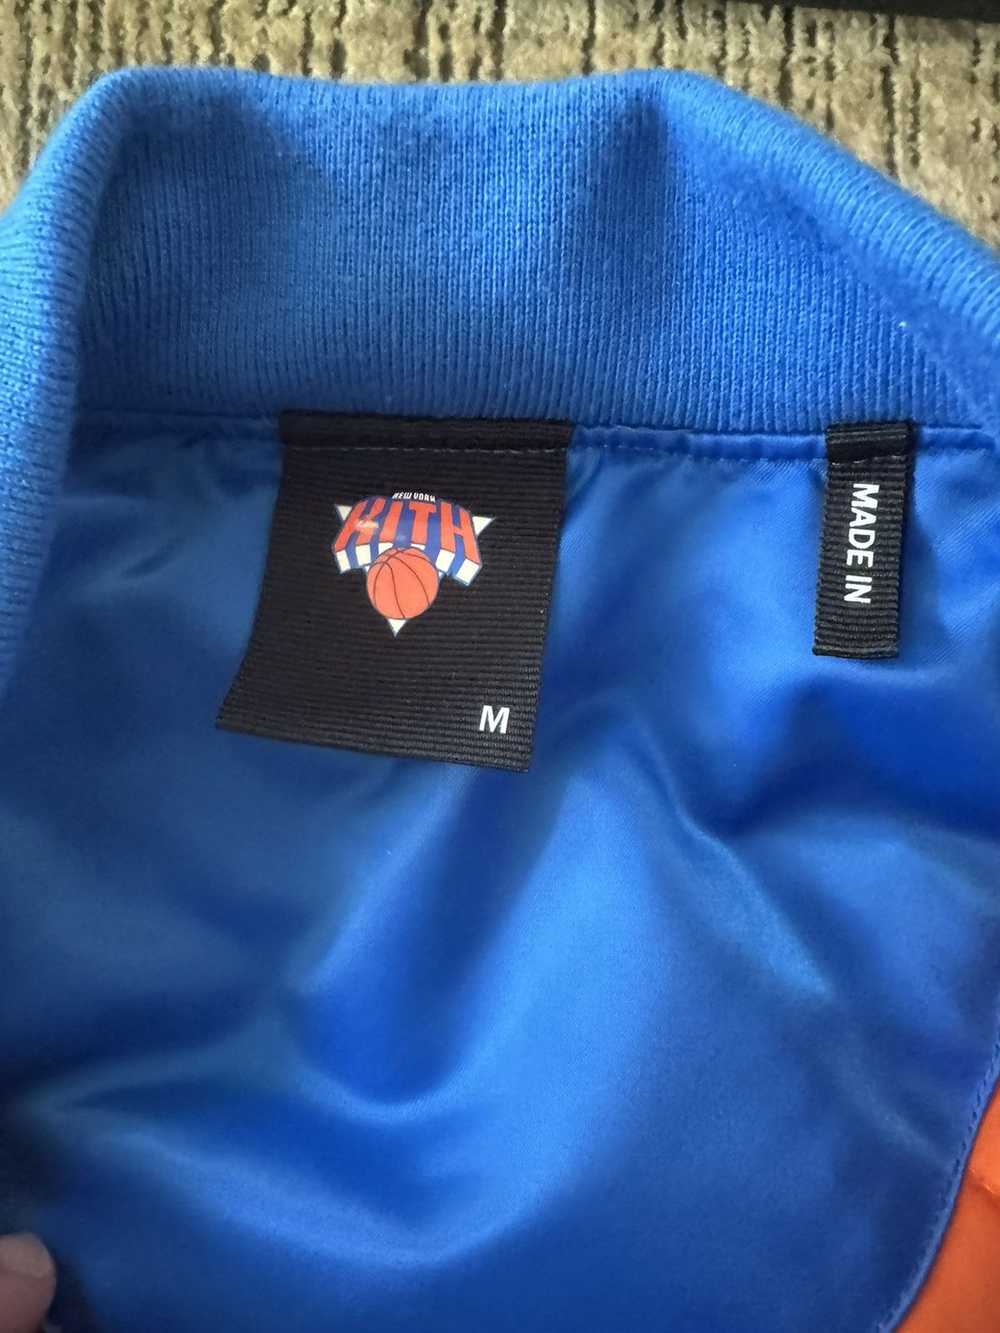 Kith Kith Knicks Bomber Jacket - image 4